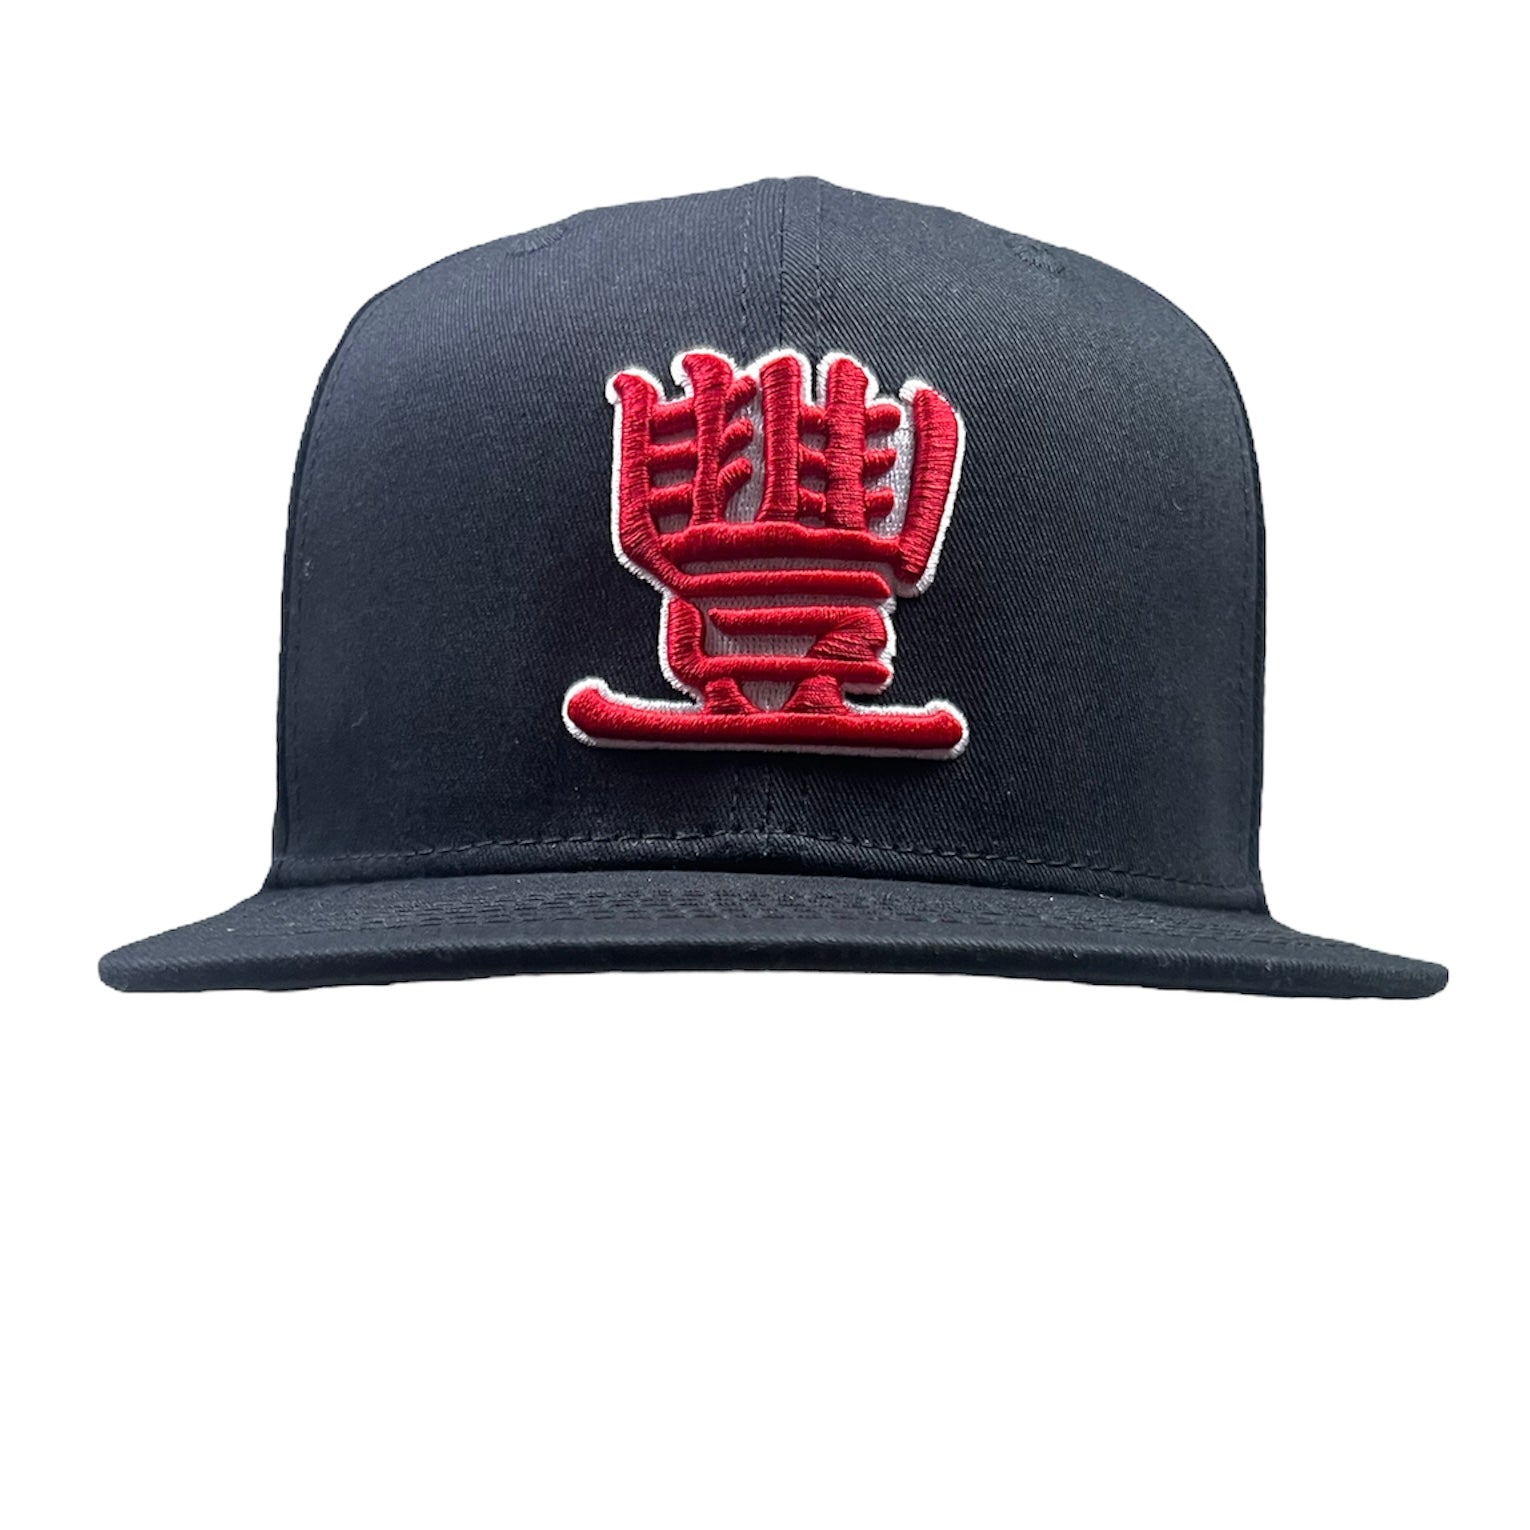 Chicago White Sox Custom Emblem SnapBack Hat